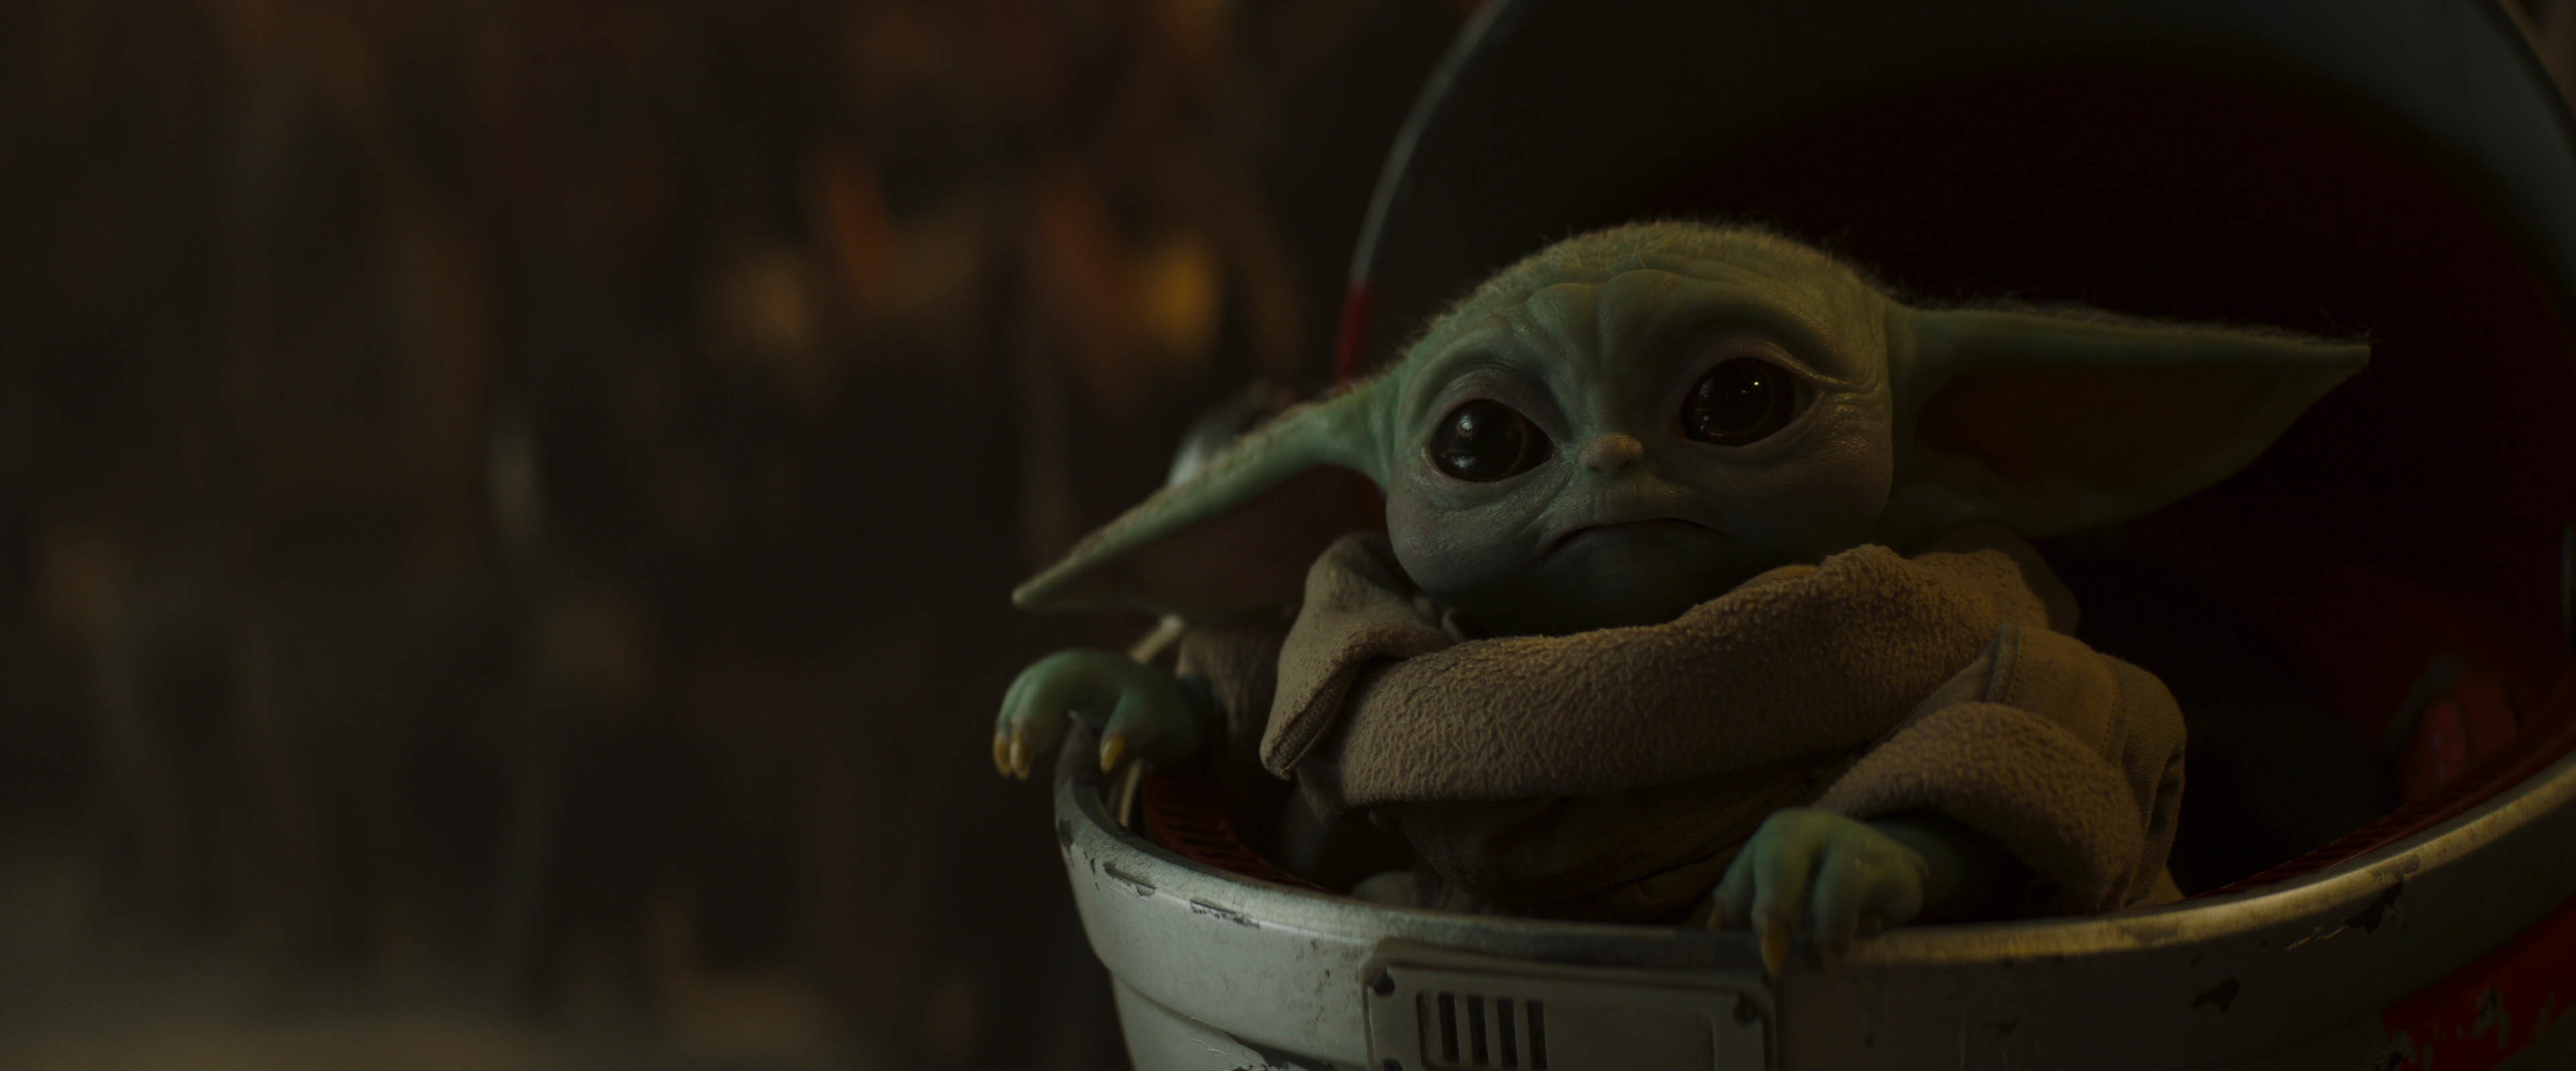 Hoće li se Baby Yoda pojaviti u knjizi Bobe Fetta?